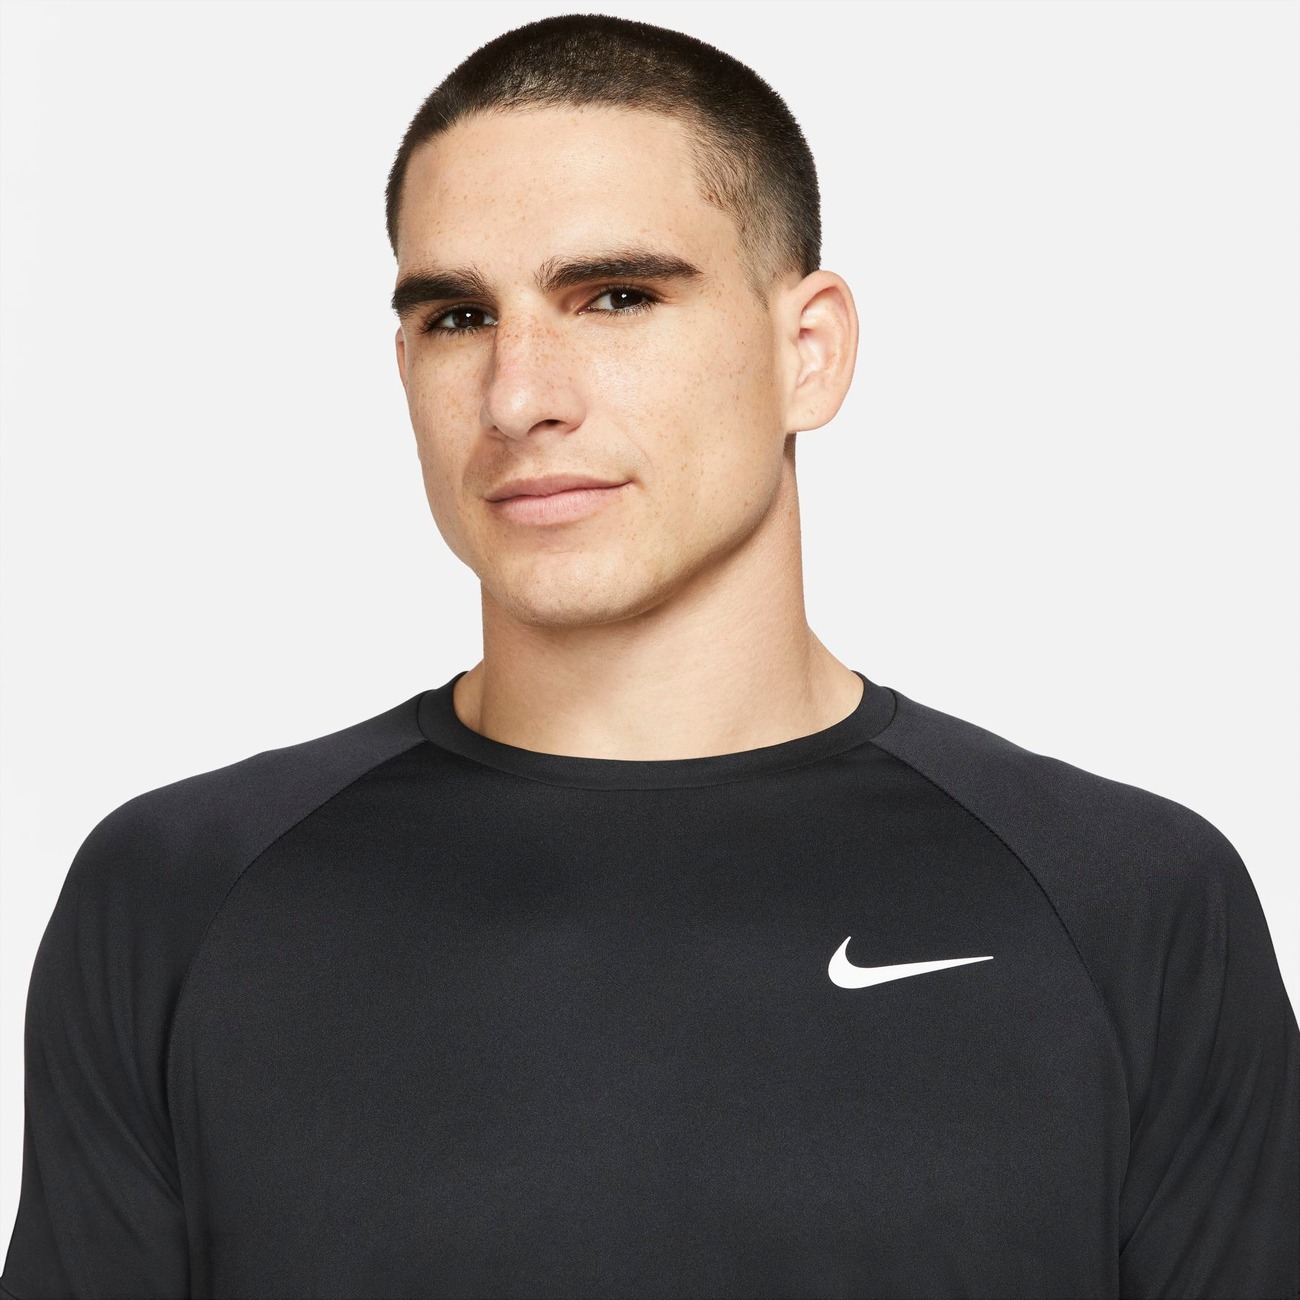 Camiseta Nike Essential Hydro Masculina - Foto 3